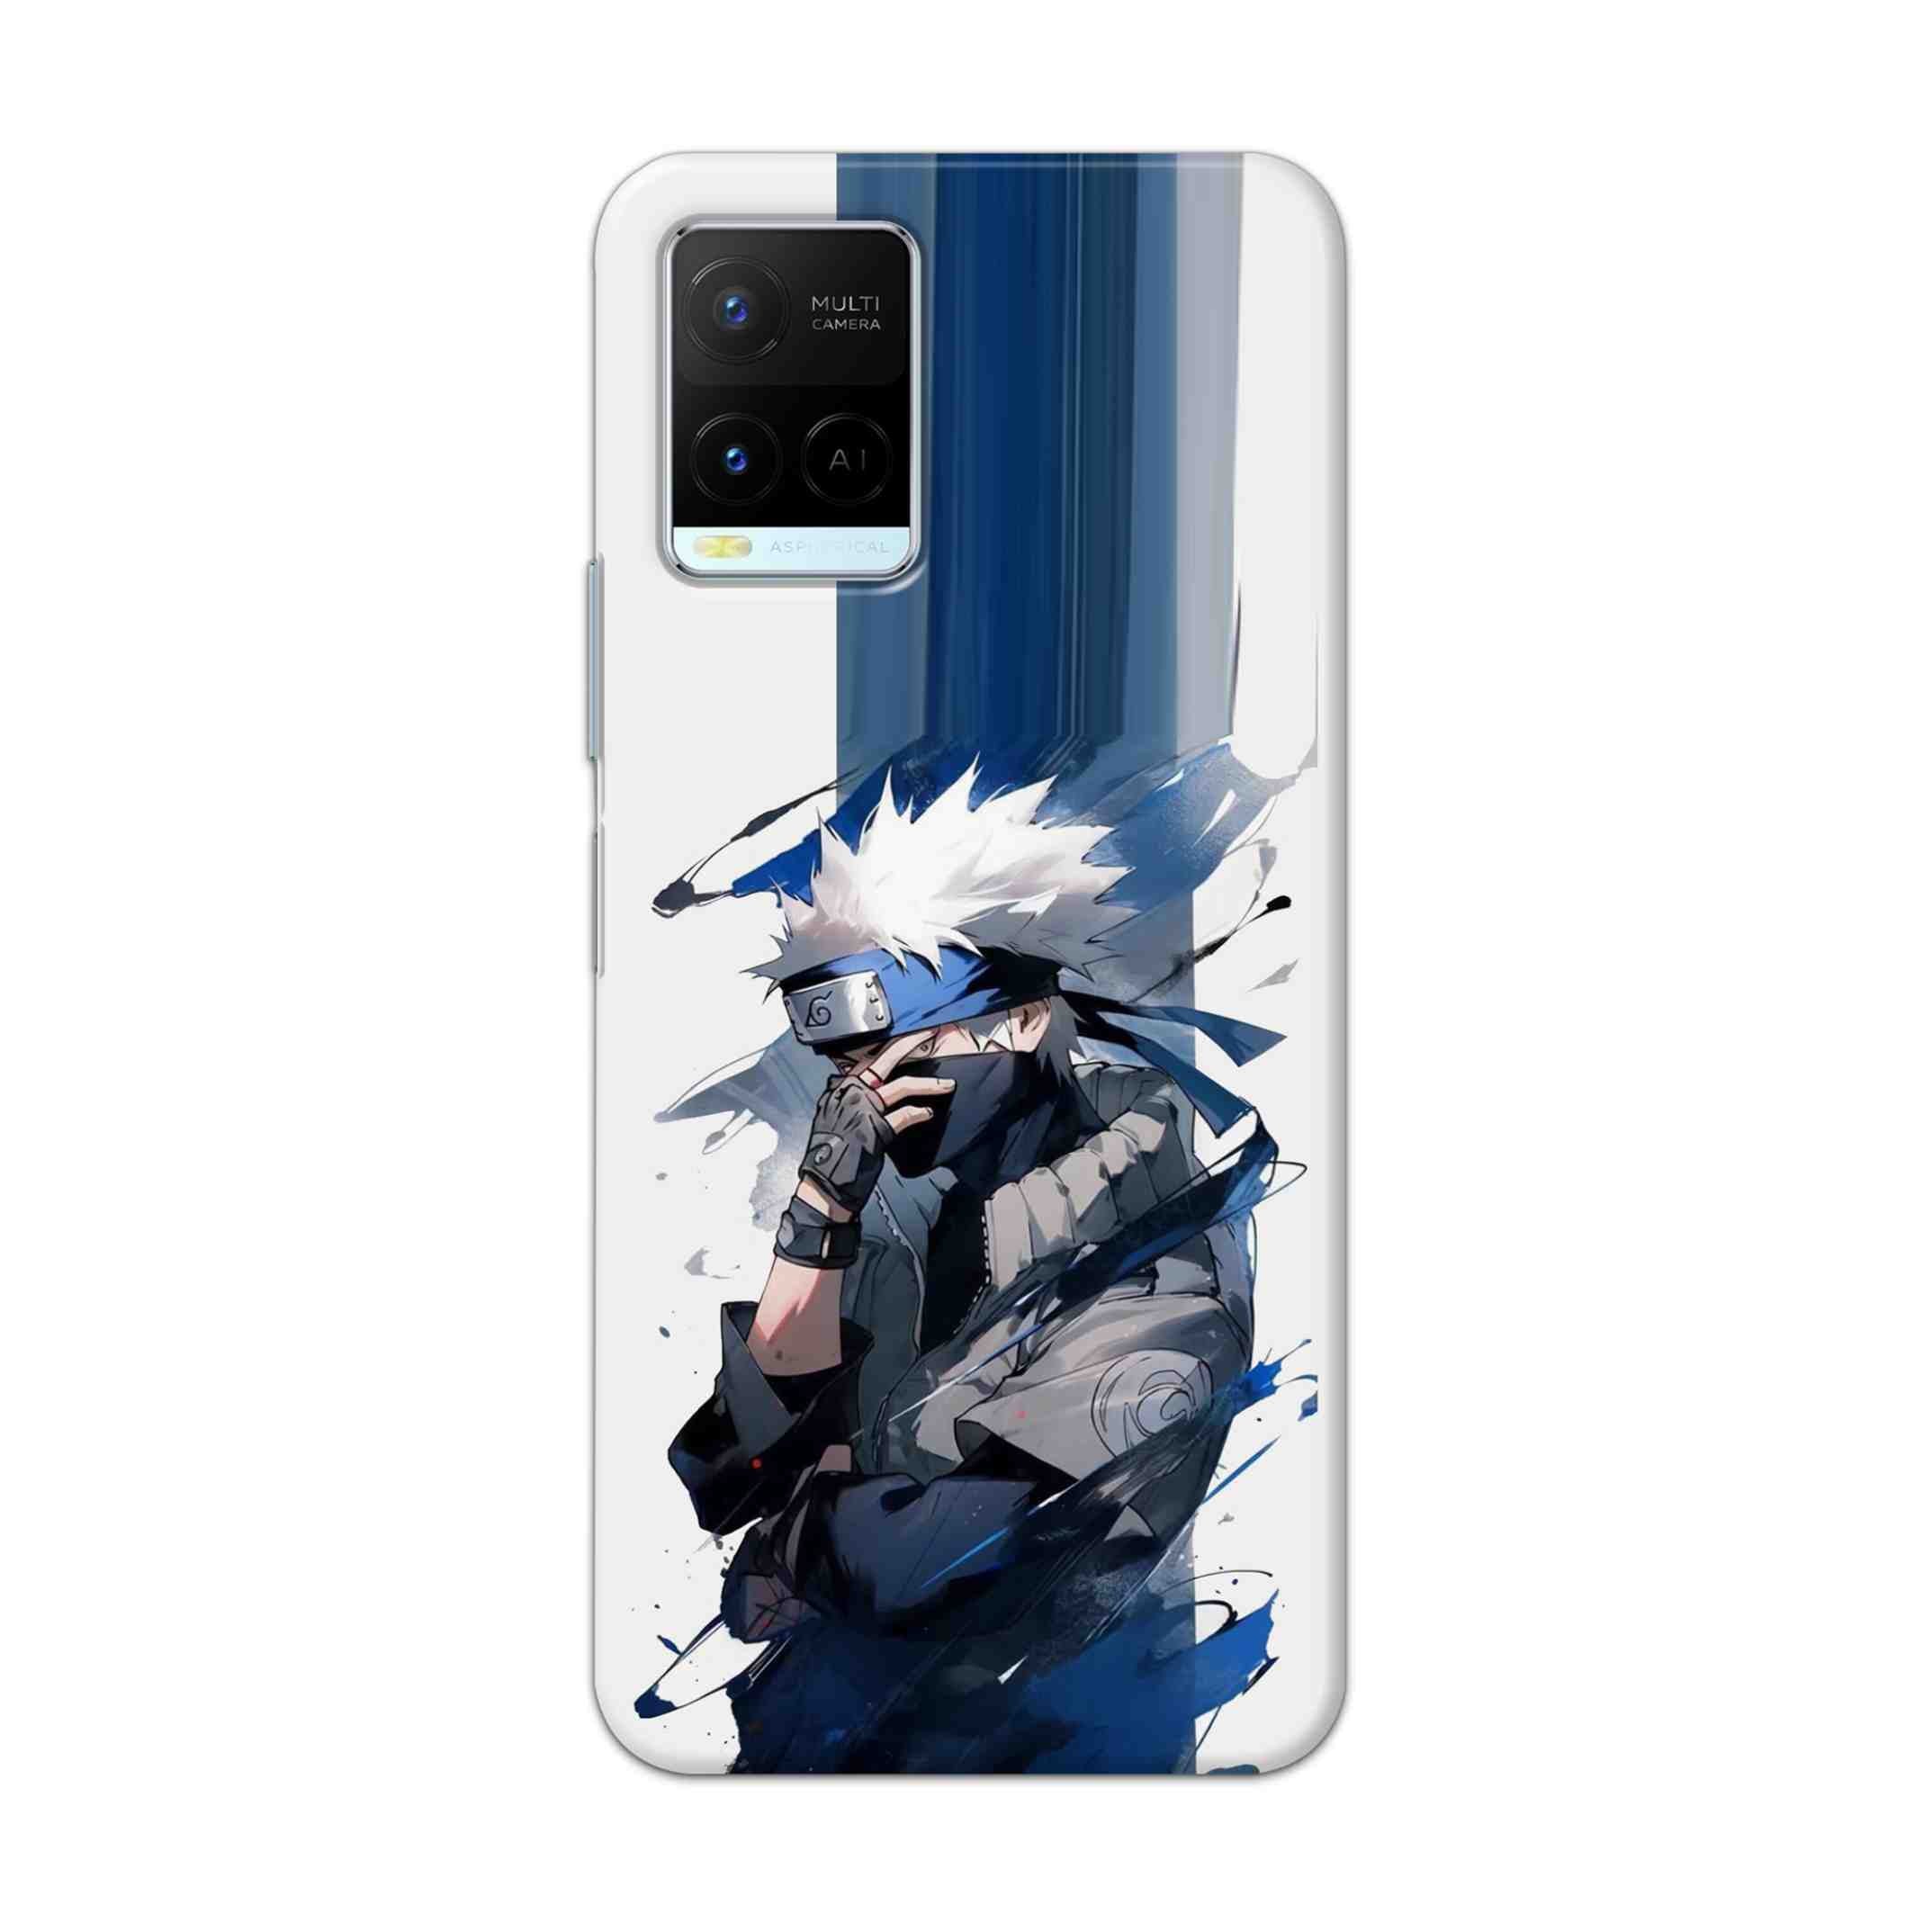 Buy Kakachi Hard Back Mobile Phone Case Cover For Vivo Y21 2021 Online